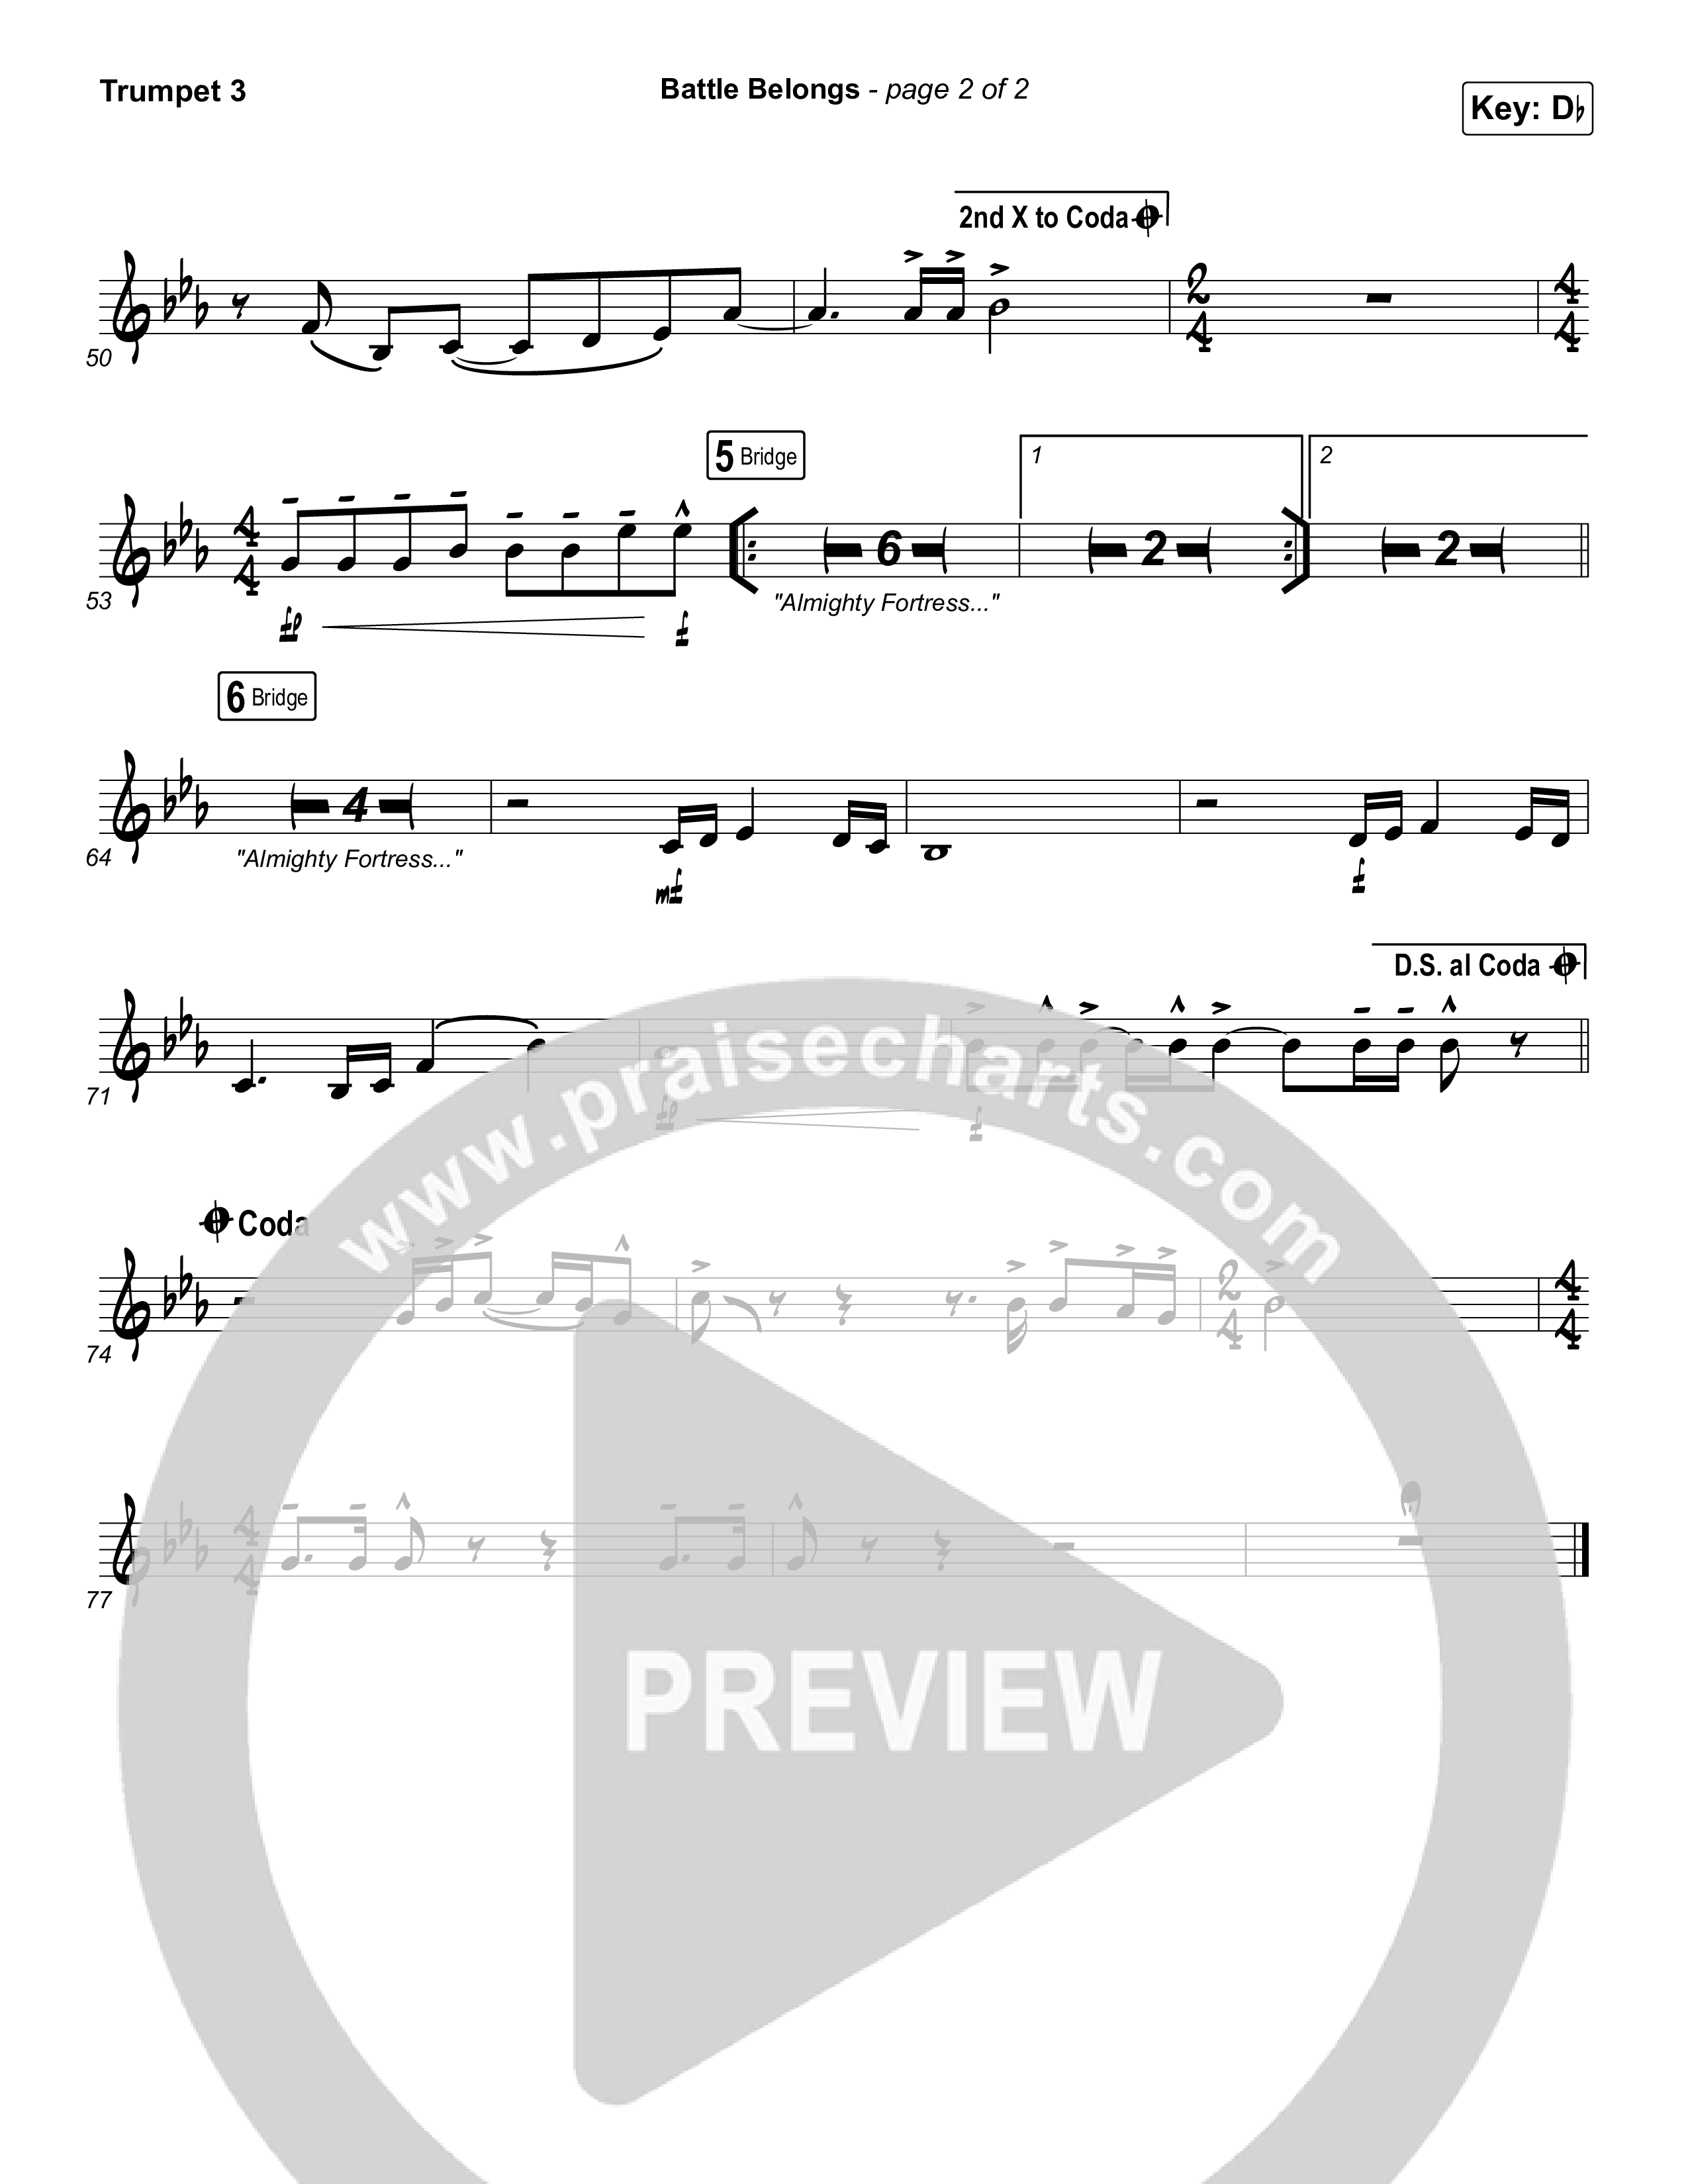 Battle Belongs (Choral Anthem SATB) Trumpet 3 (Phil Wickham / Arr. Luke Gambill)